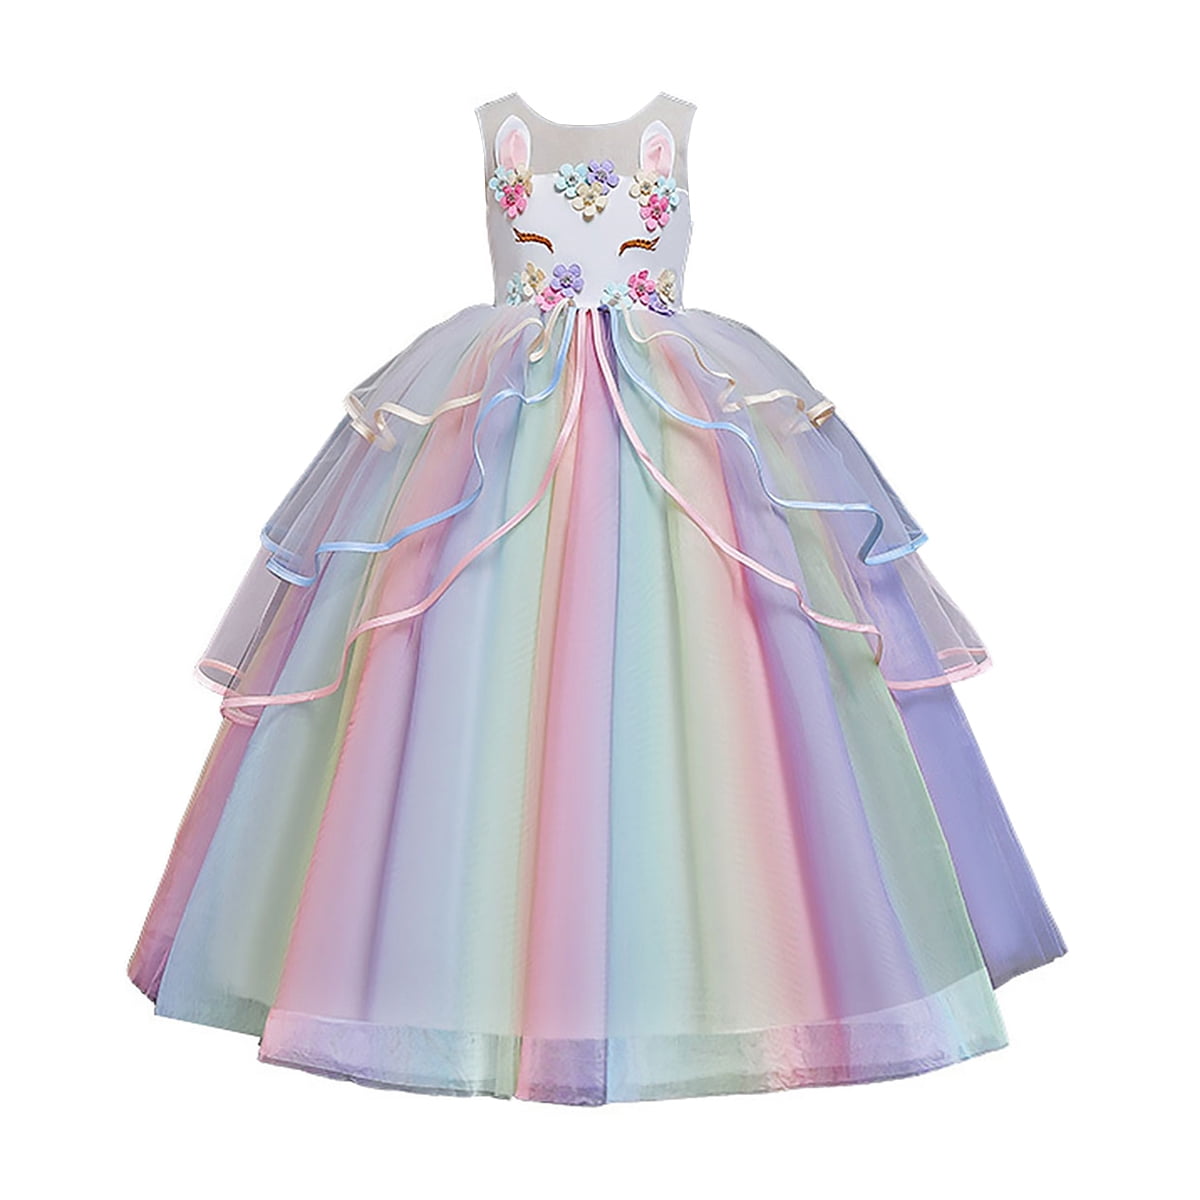 Girls Kids Unicorn Costume Cosplay Fancy Dress Party Princess Outfit Beach Dress 